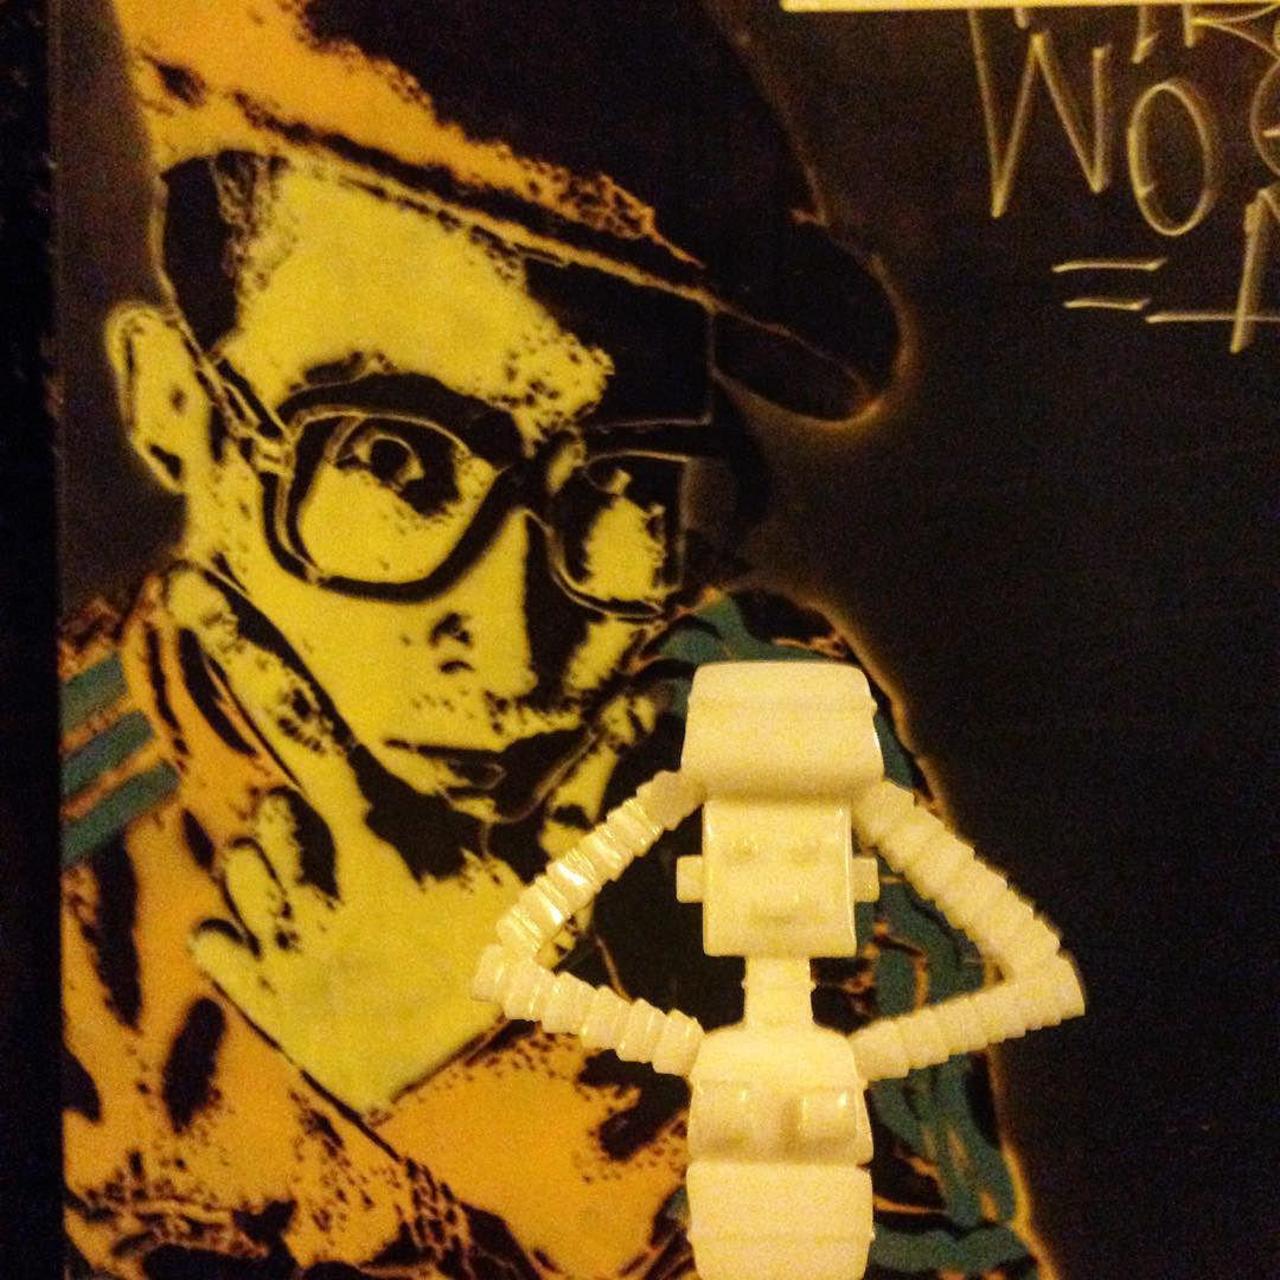 RT @circumjacent_fr: #Paris #graffiti photo by @k8wanitas http://ift.tt/1O9QIfC #StreetArt http://t.co/dOfjiww7Ex